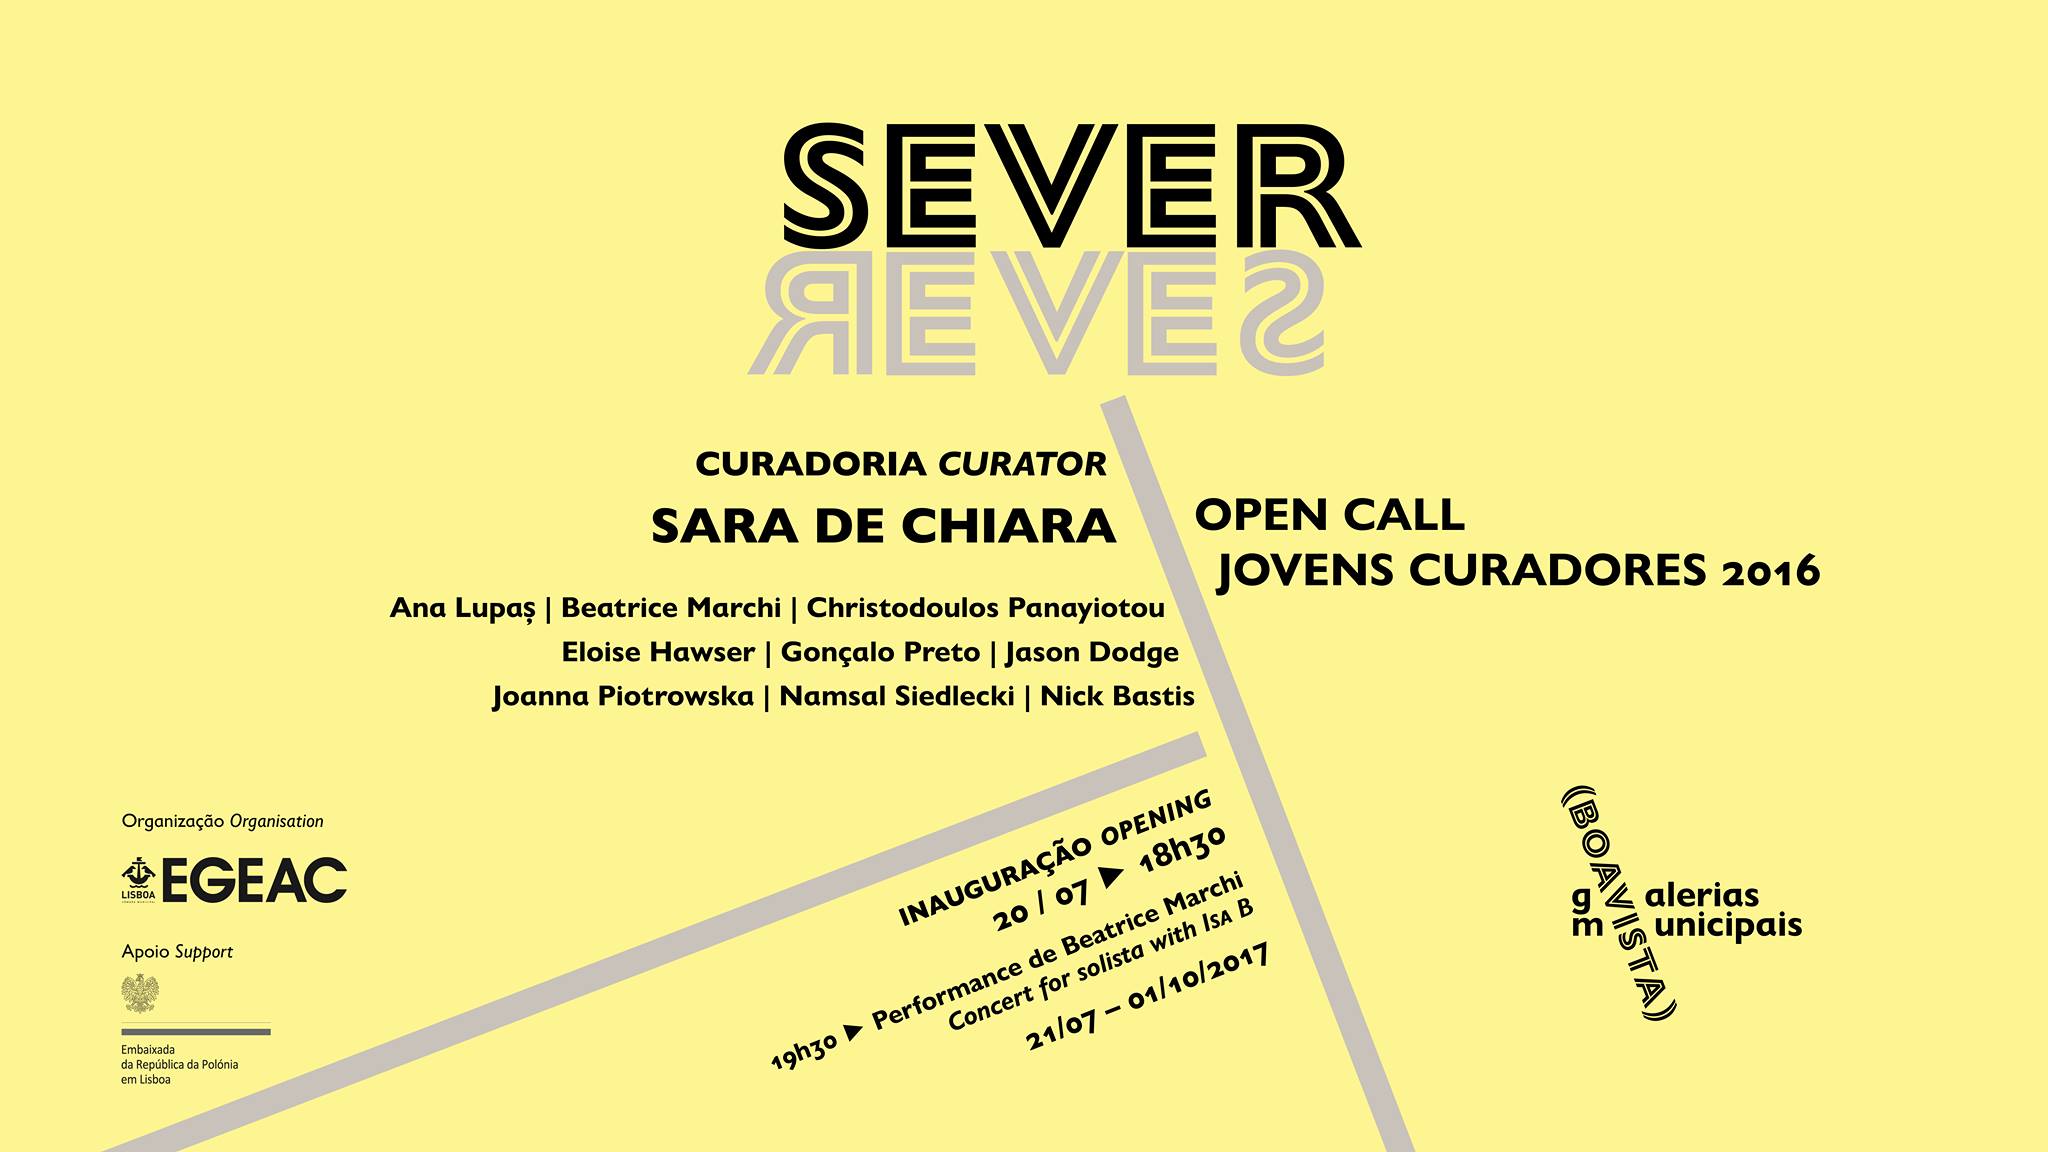 #Ana_Lupas participates into the group show: "SEVER" at Galeria Boavista, Lisbon - 